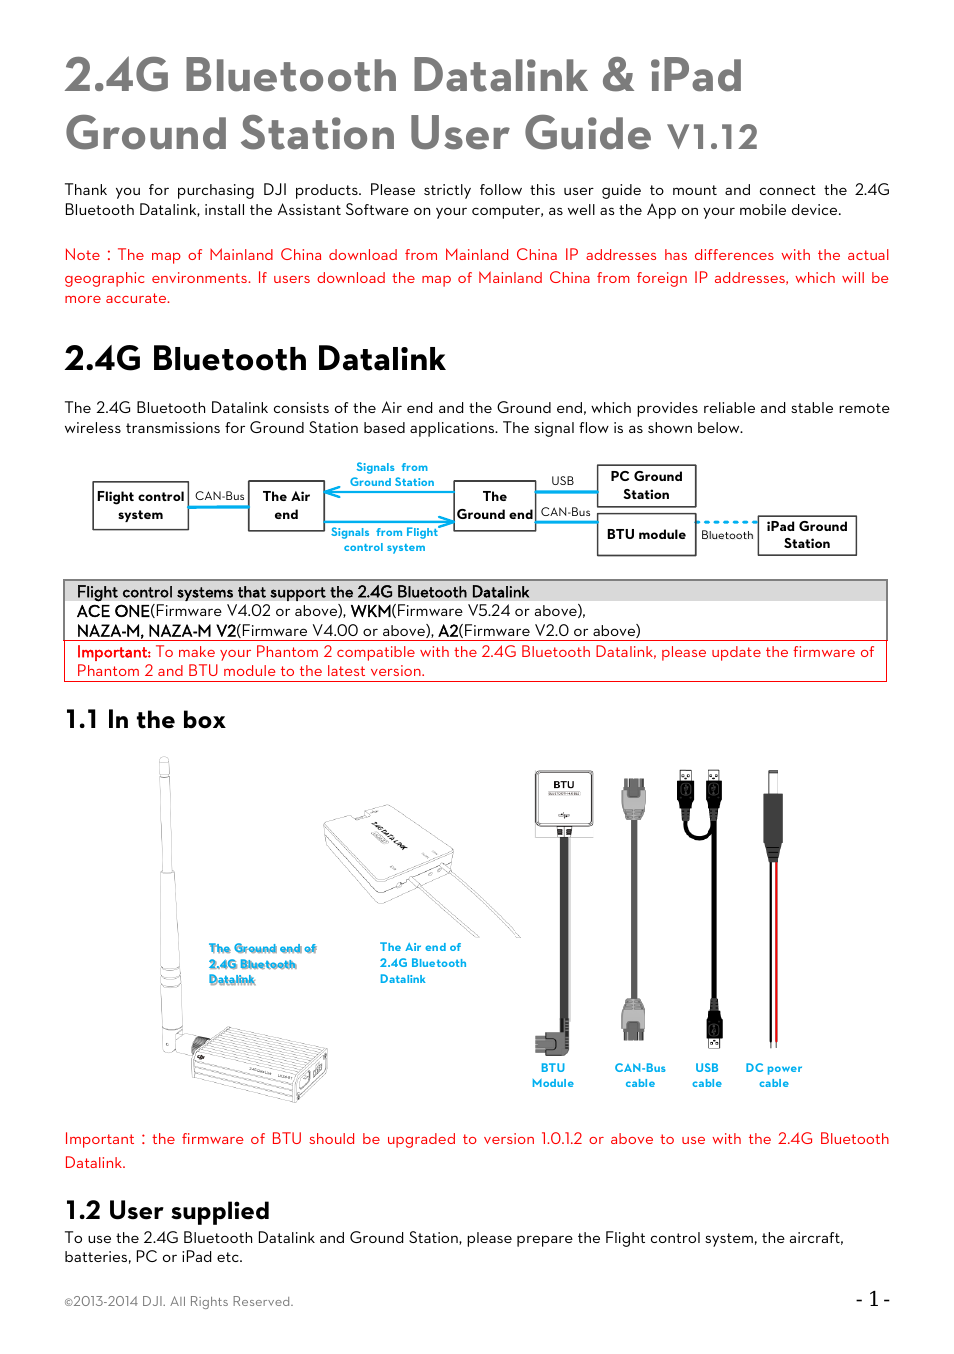 2.4G Bluetooth Datalink & iPad Ground Station